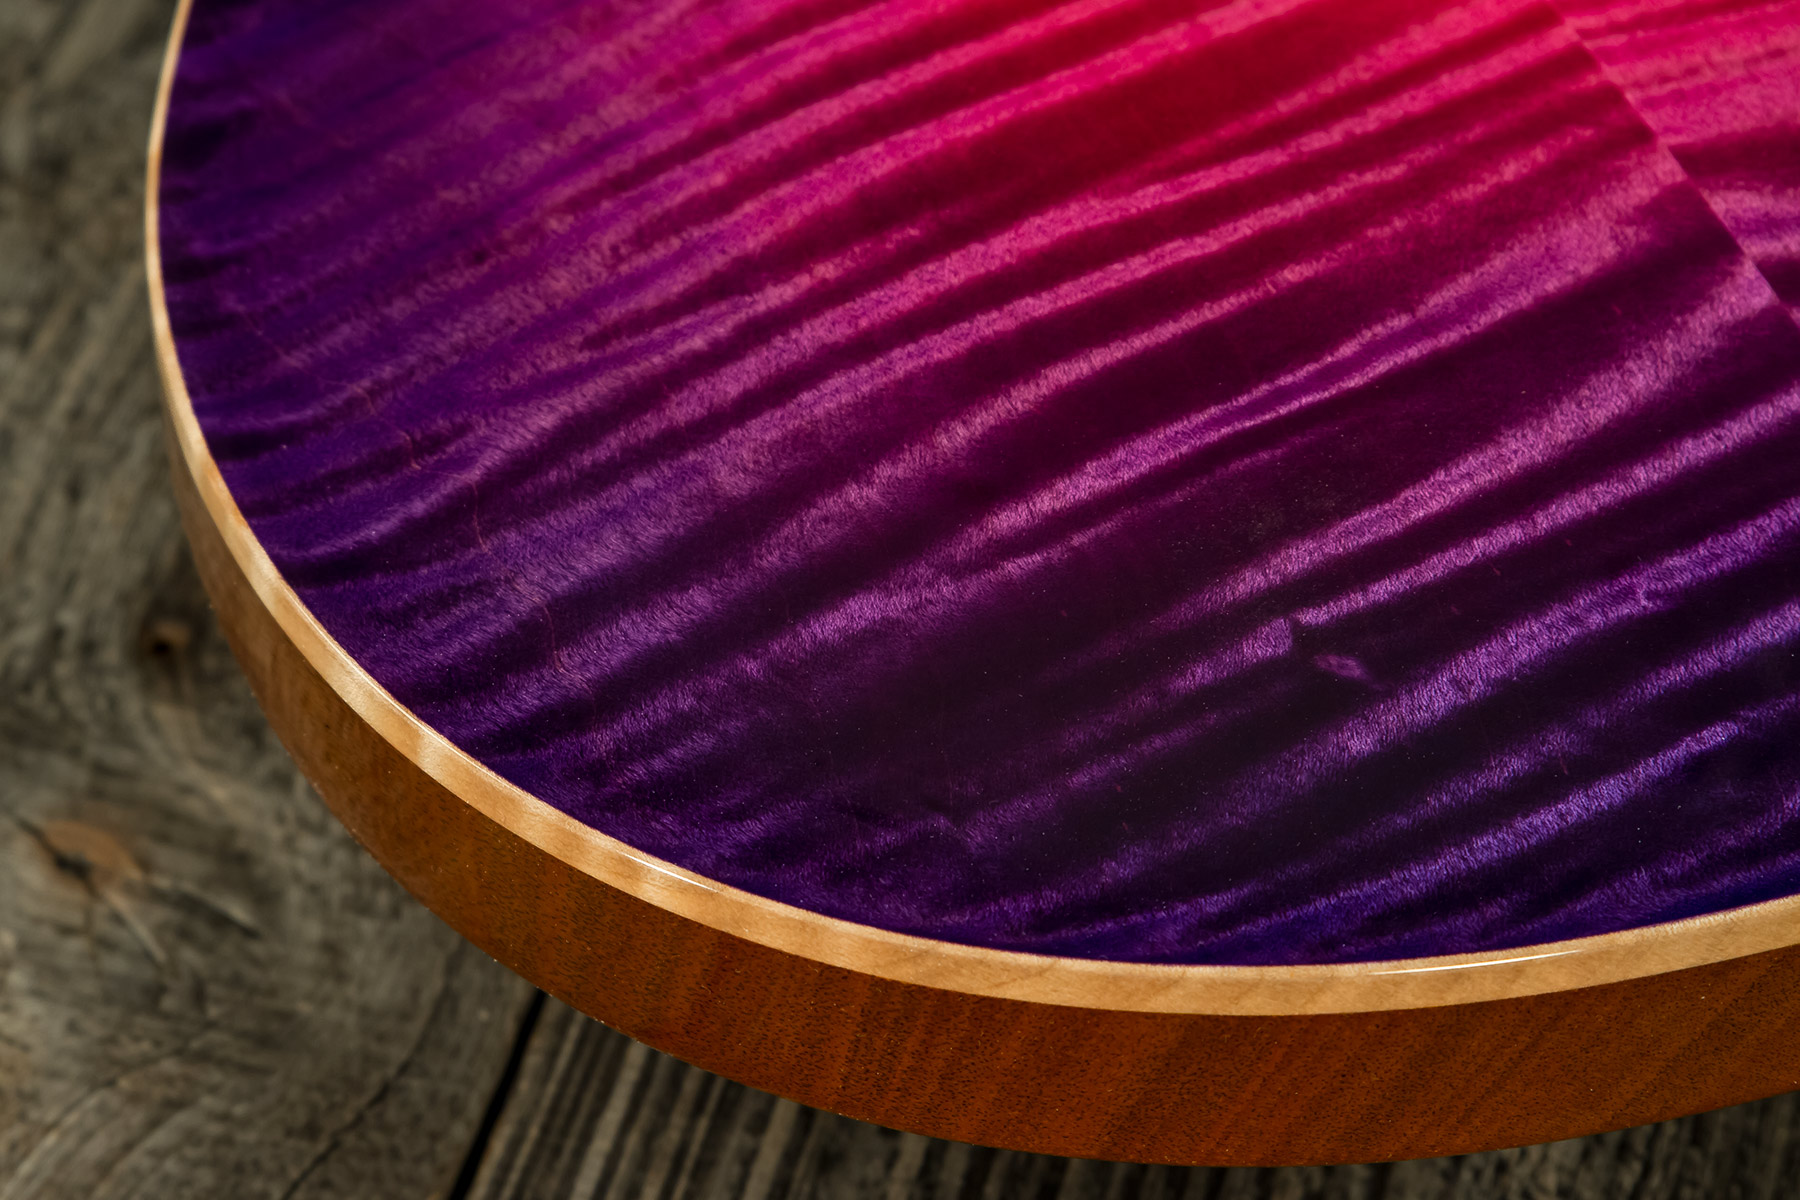 Prs Orianthi Private Stock Ltd Usa 2h Trem Rw #22-353157 - Blooming Lotus Glow - Double Cut E-Gitarre - Variation 6